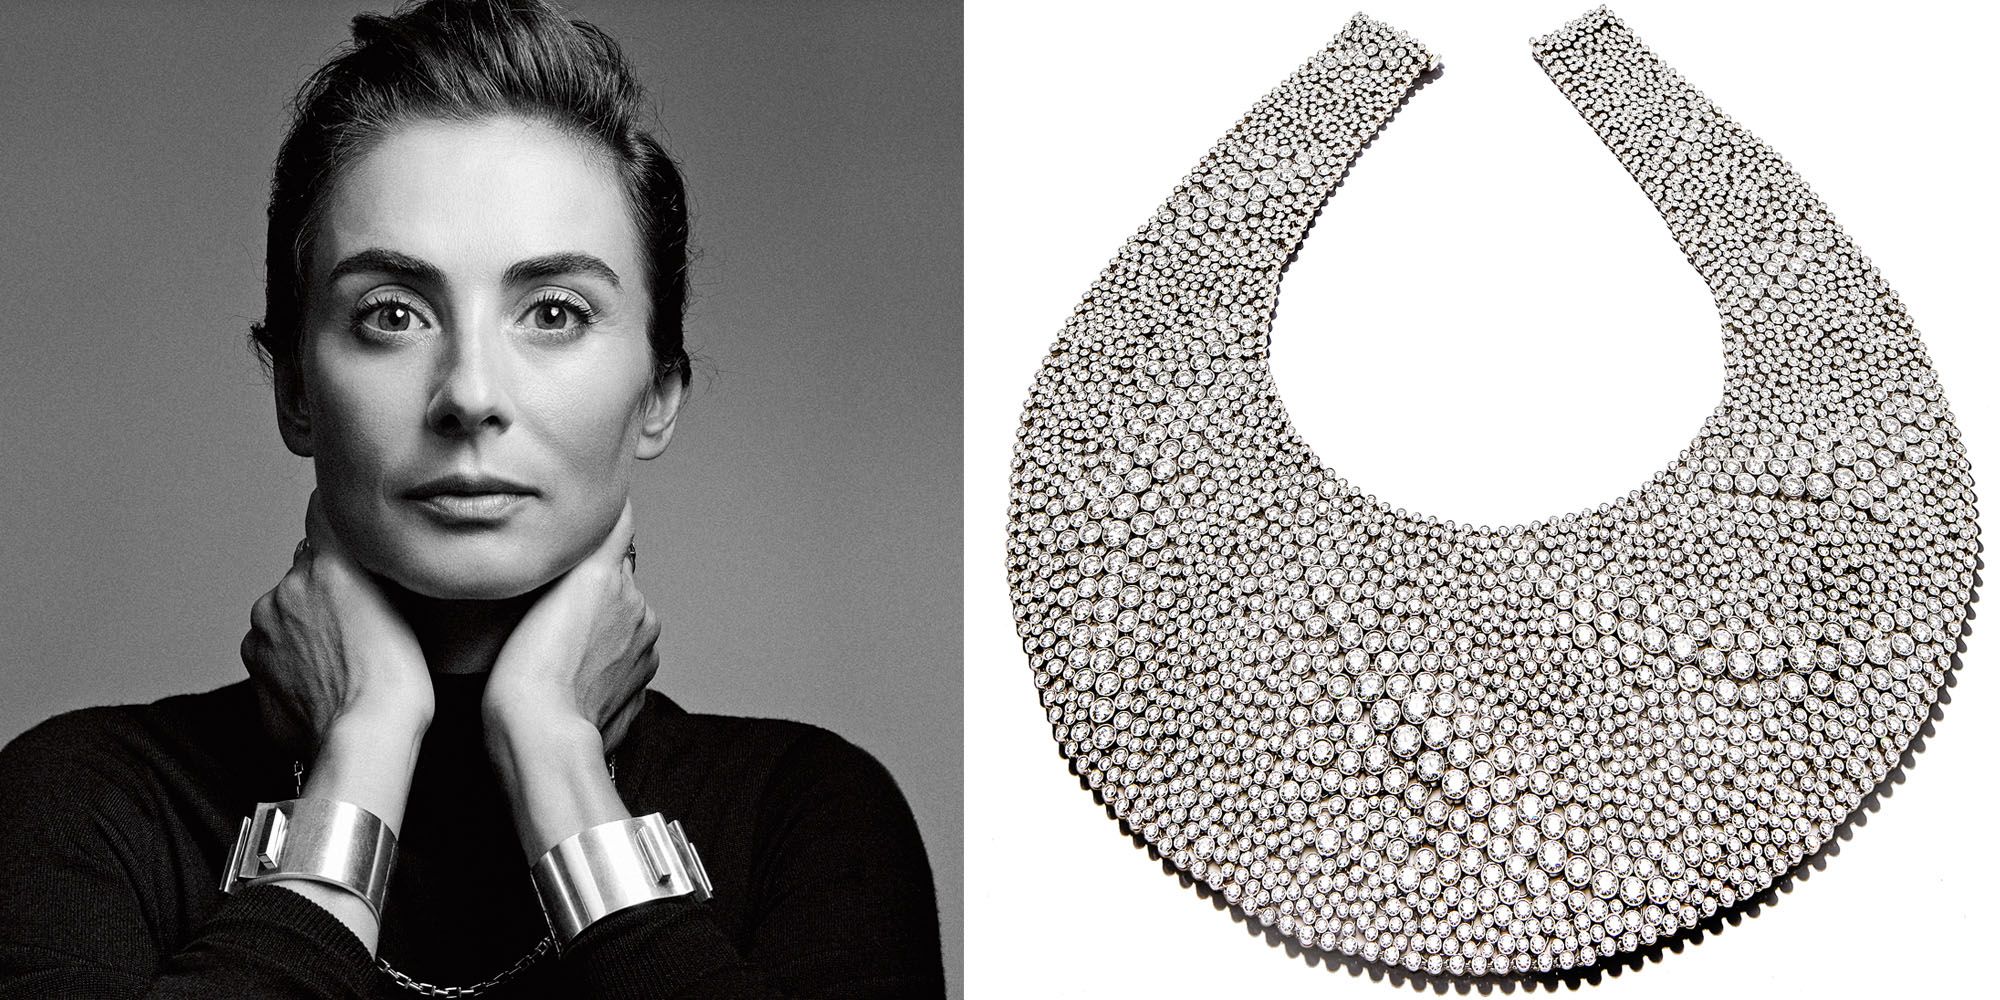 The inspirations of jewellery designer Francesca Amfitheatrof